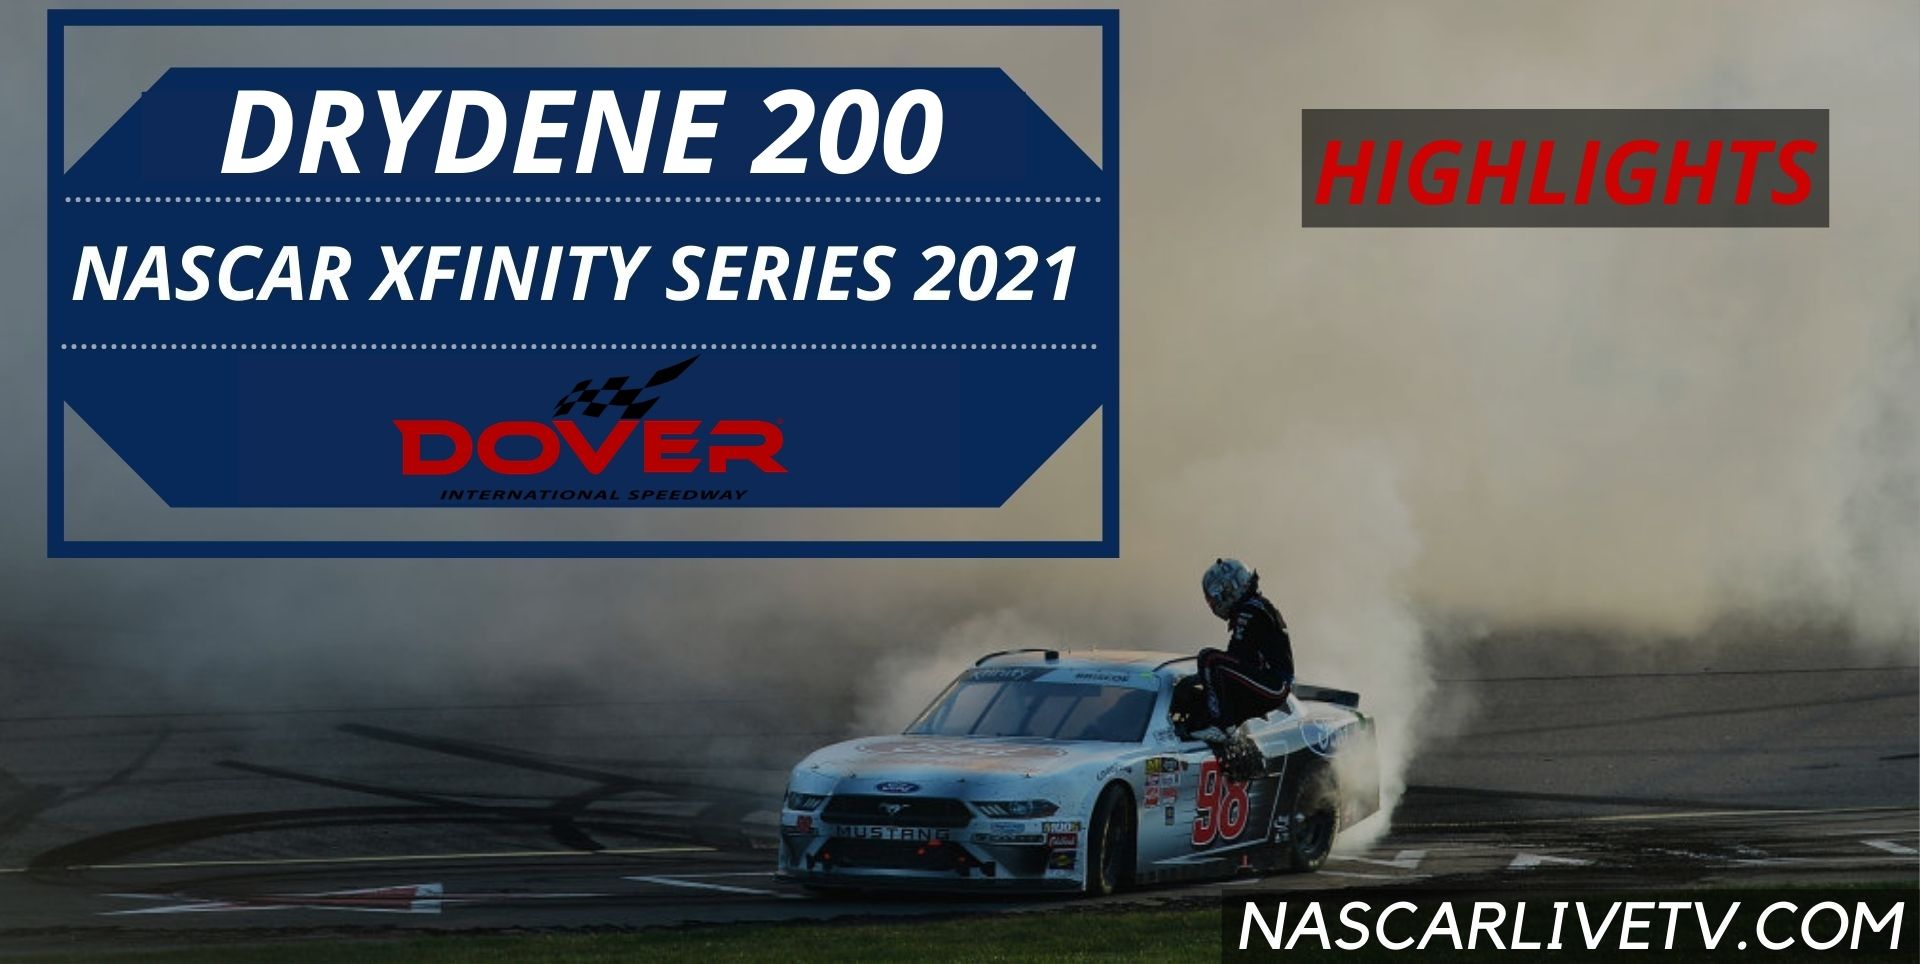 DRYDENE 200 Highlights NASCAR Xfinity Series 2021